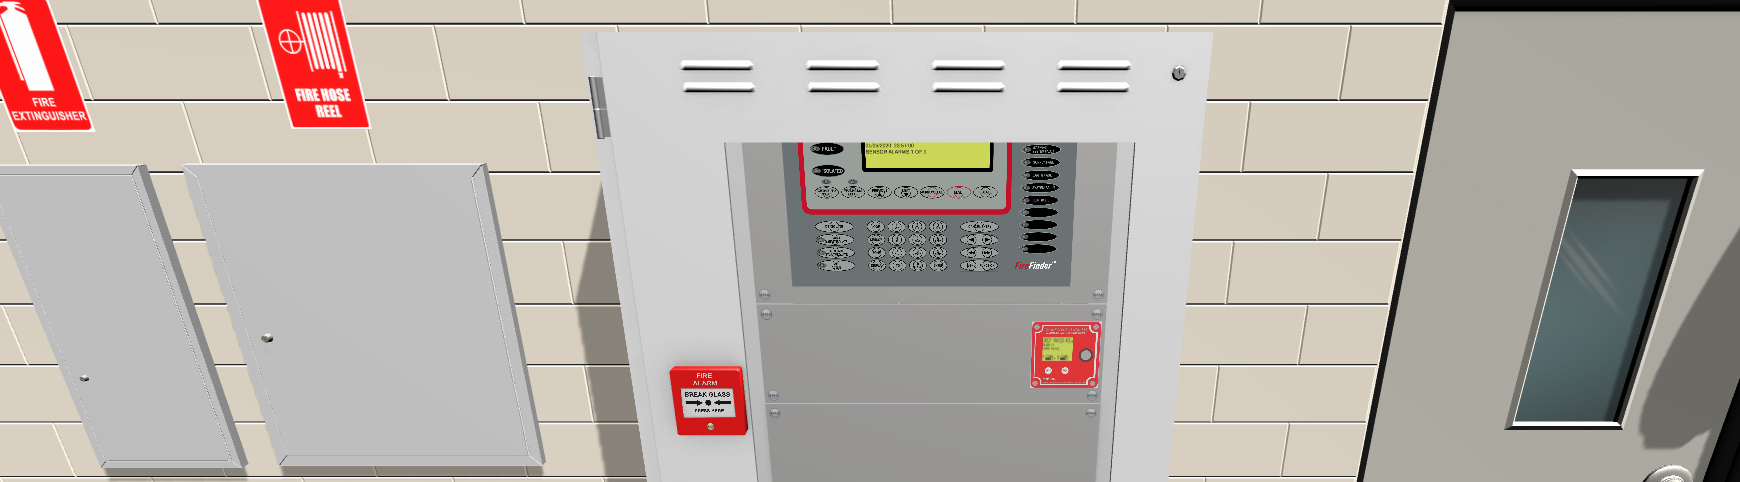 Fire Indicator Panel Simulator